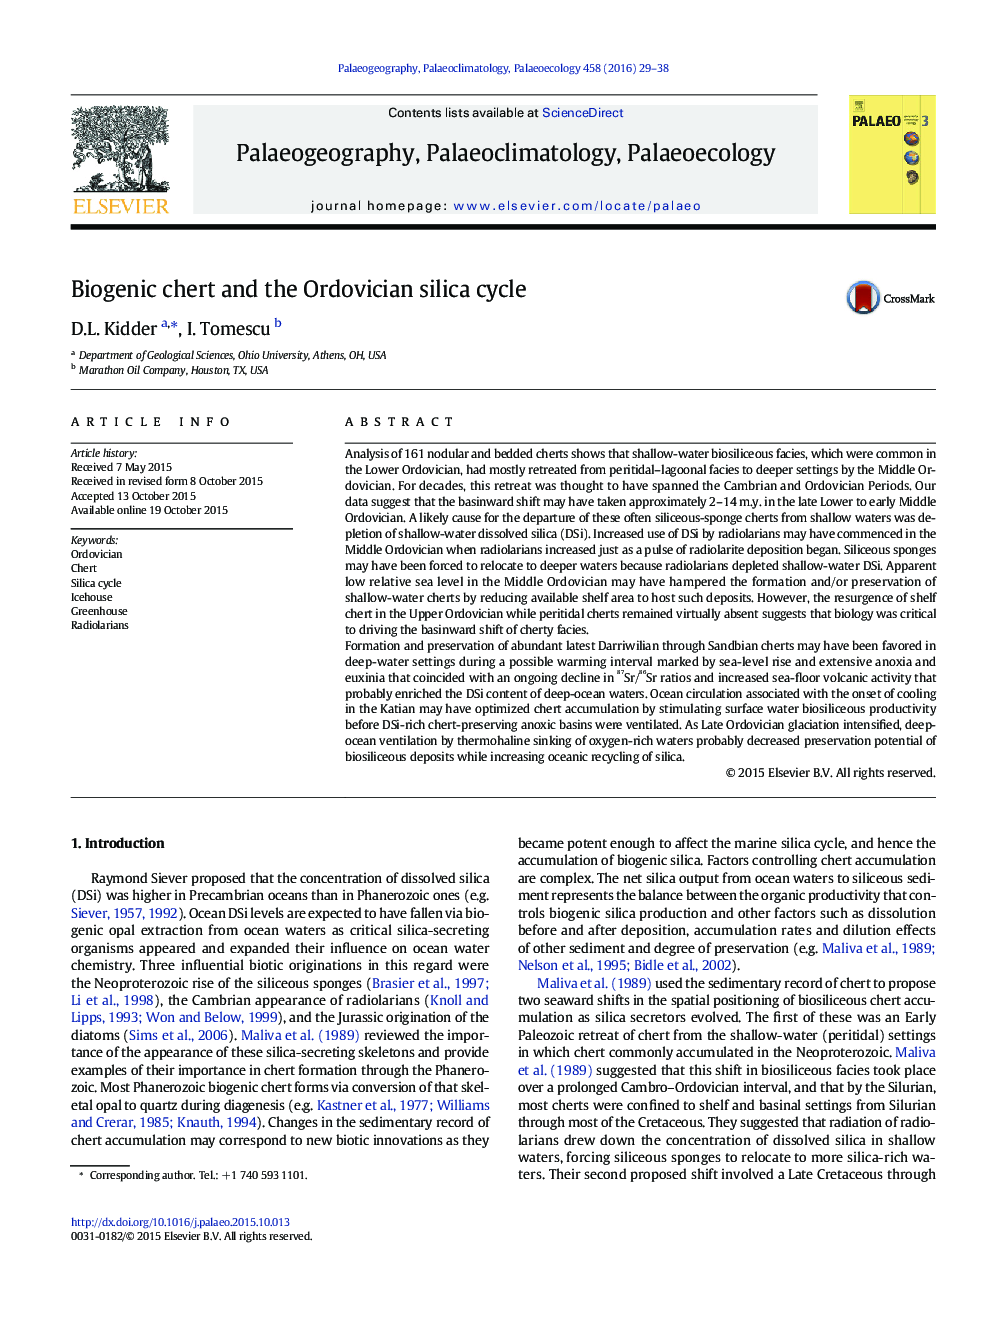 Biogenic chert and the Ordovician silica cycle